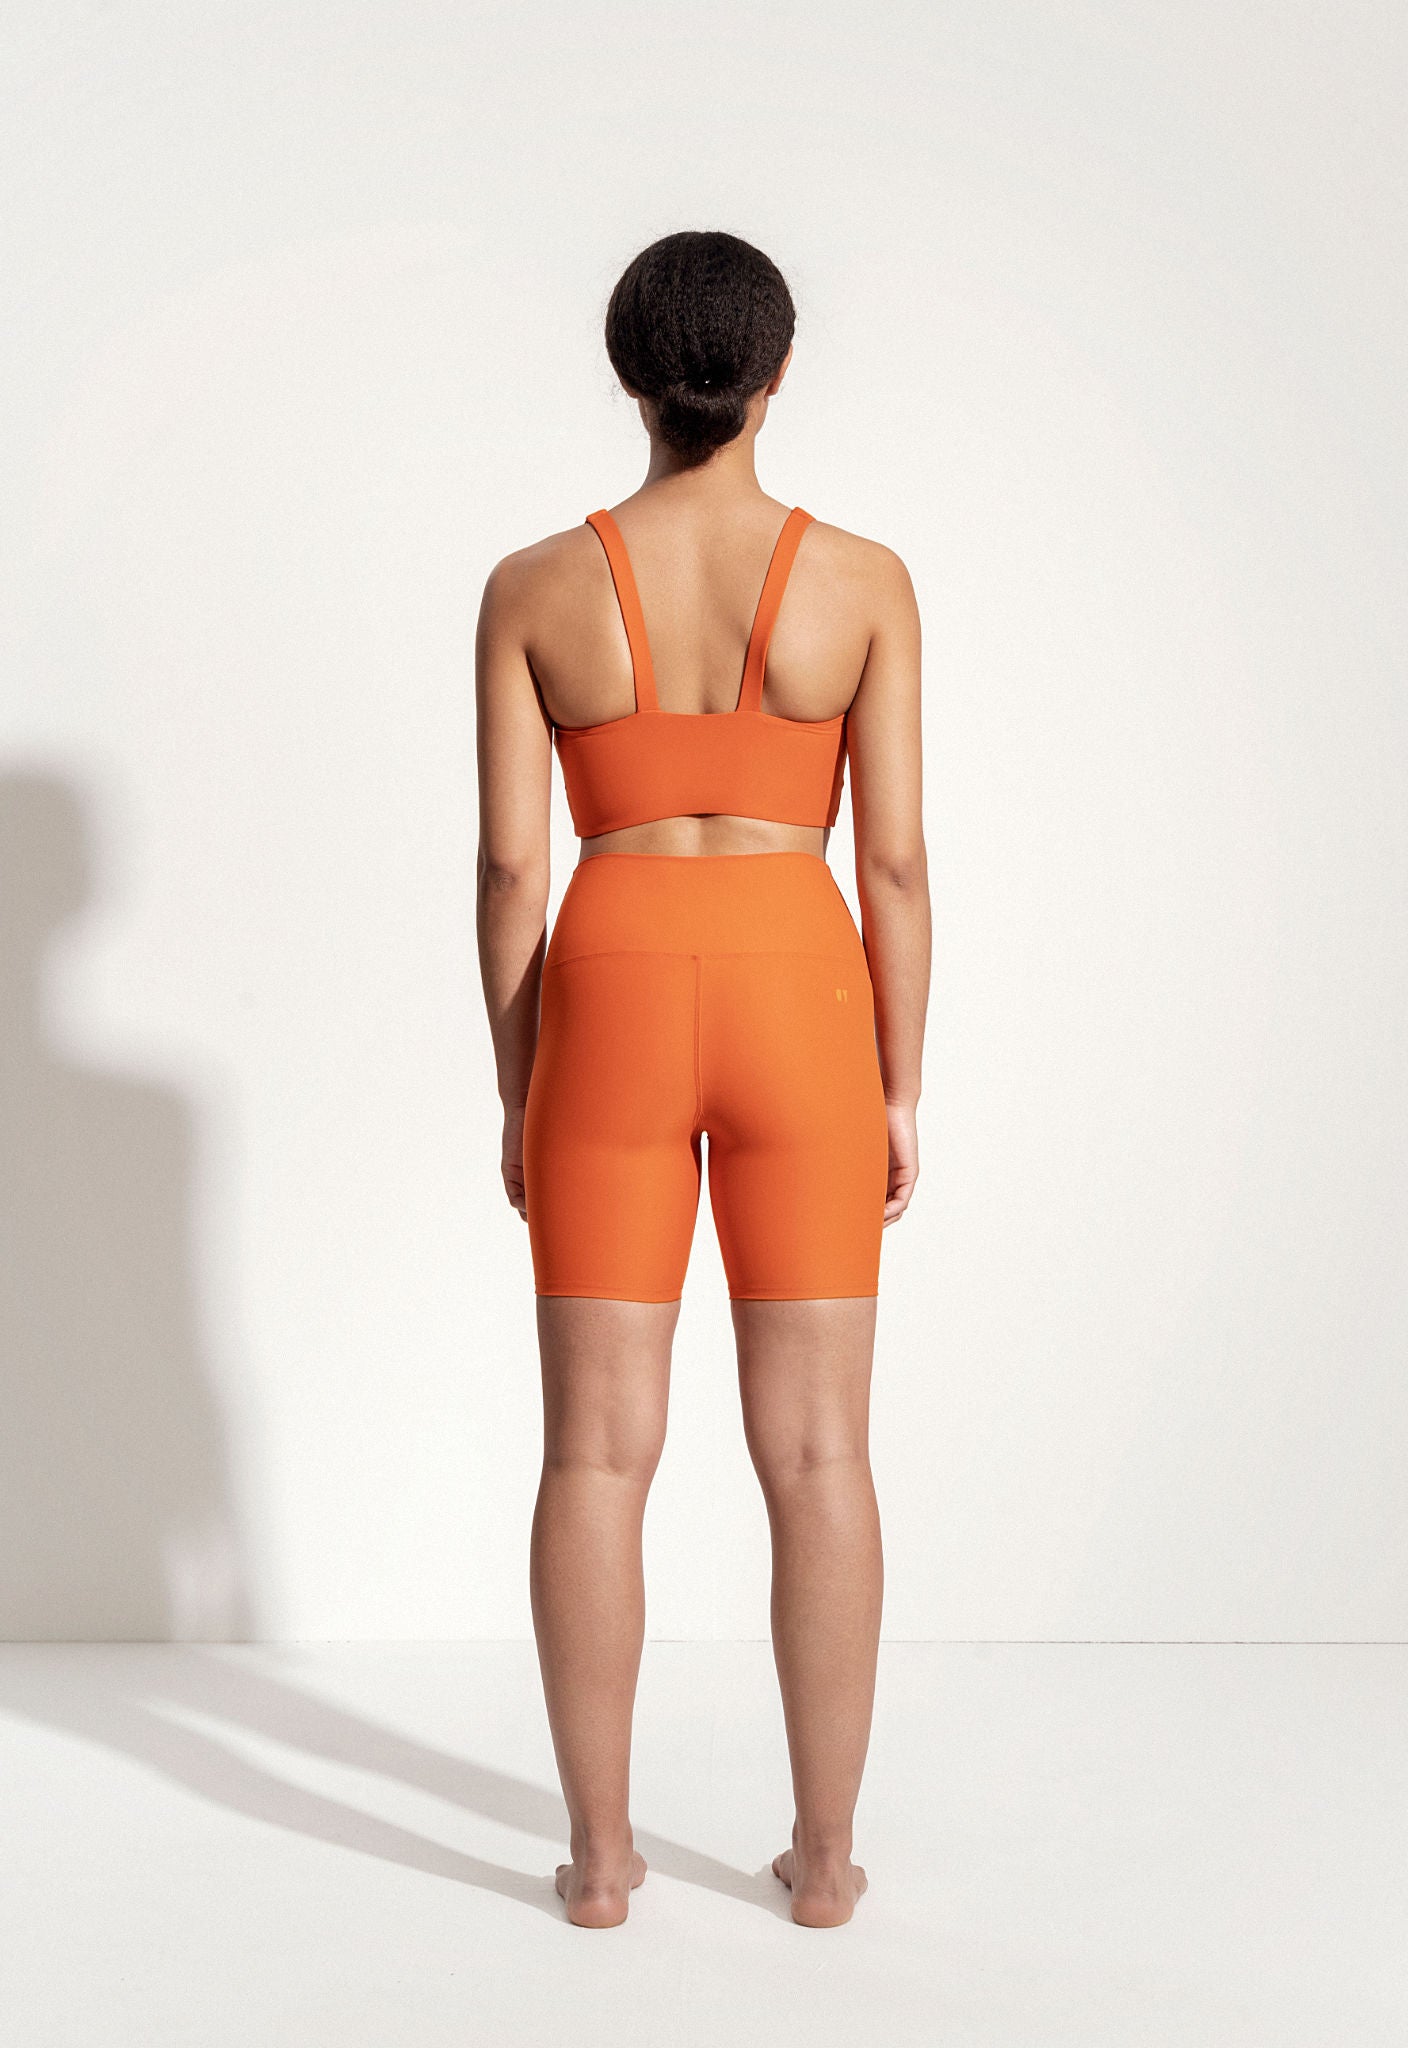 Oy Yoga Activewear 20 Leggings Capri Tangerine 01